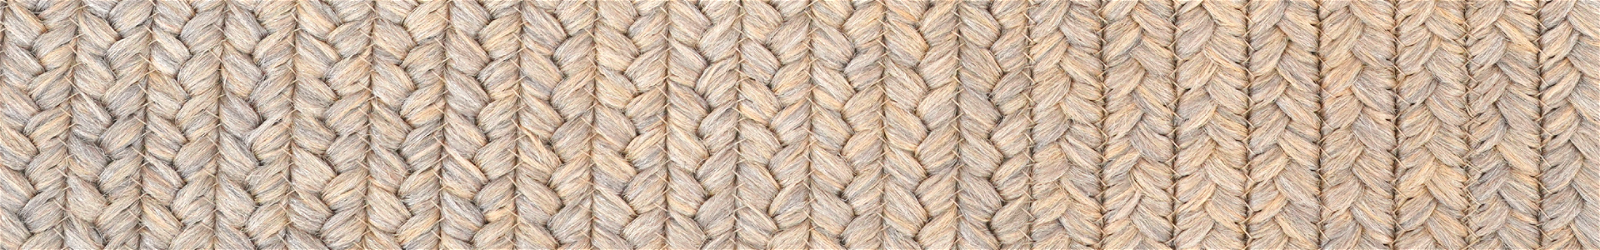 10 x 10 - 2.5 x 6' - Brown Braided Rugs